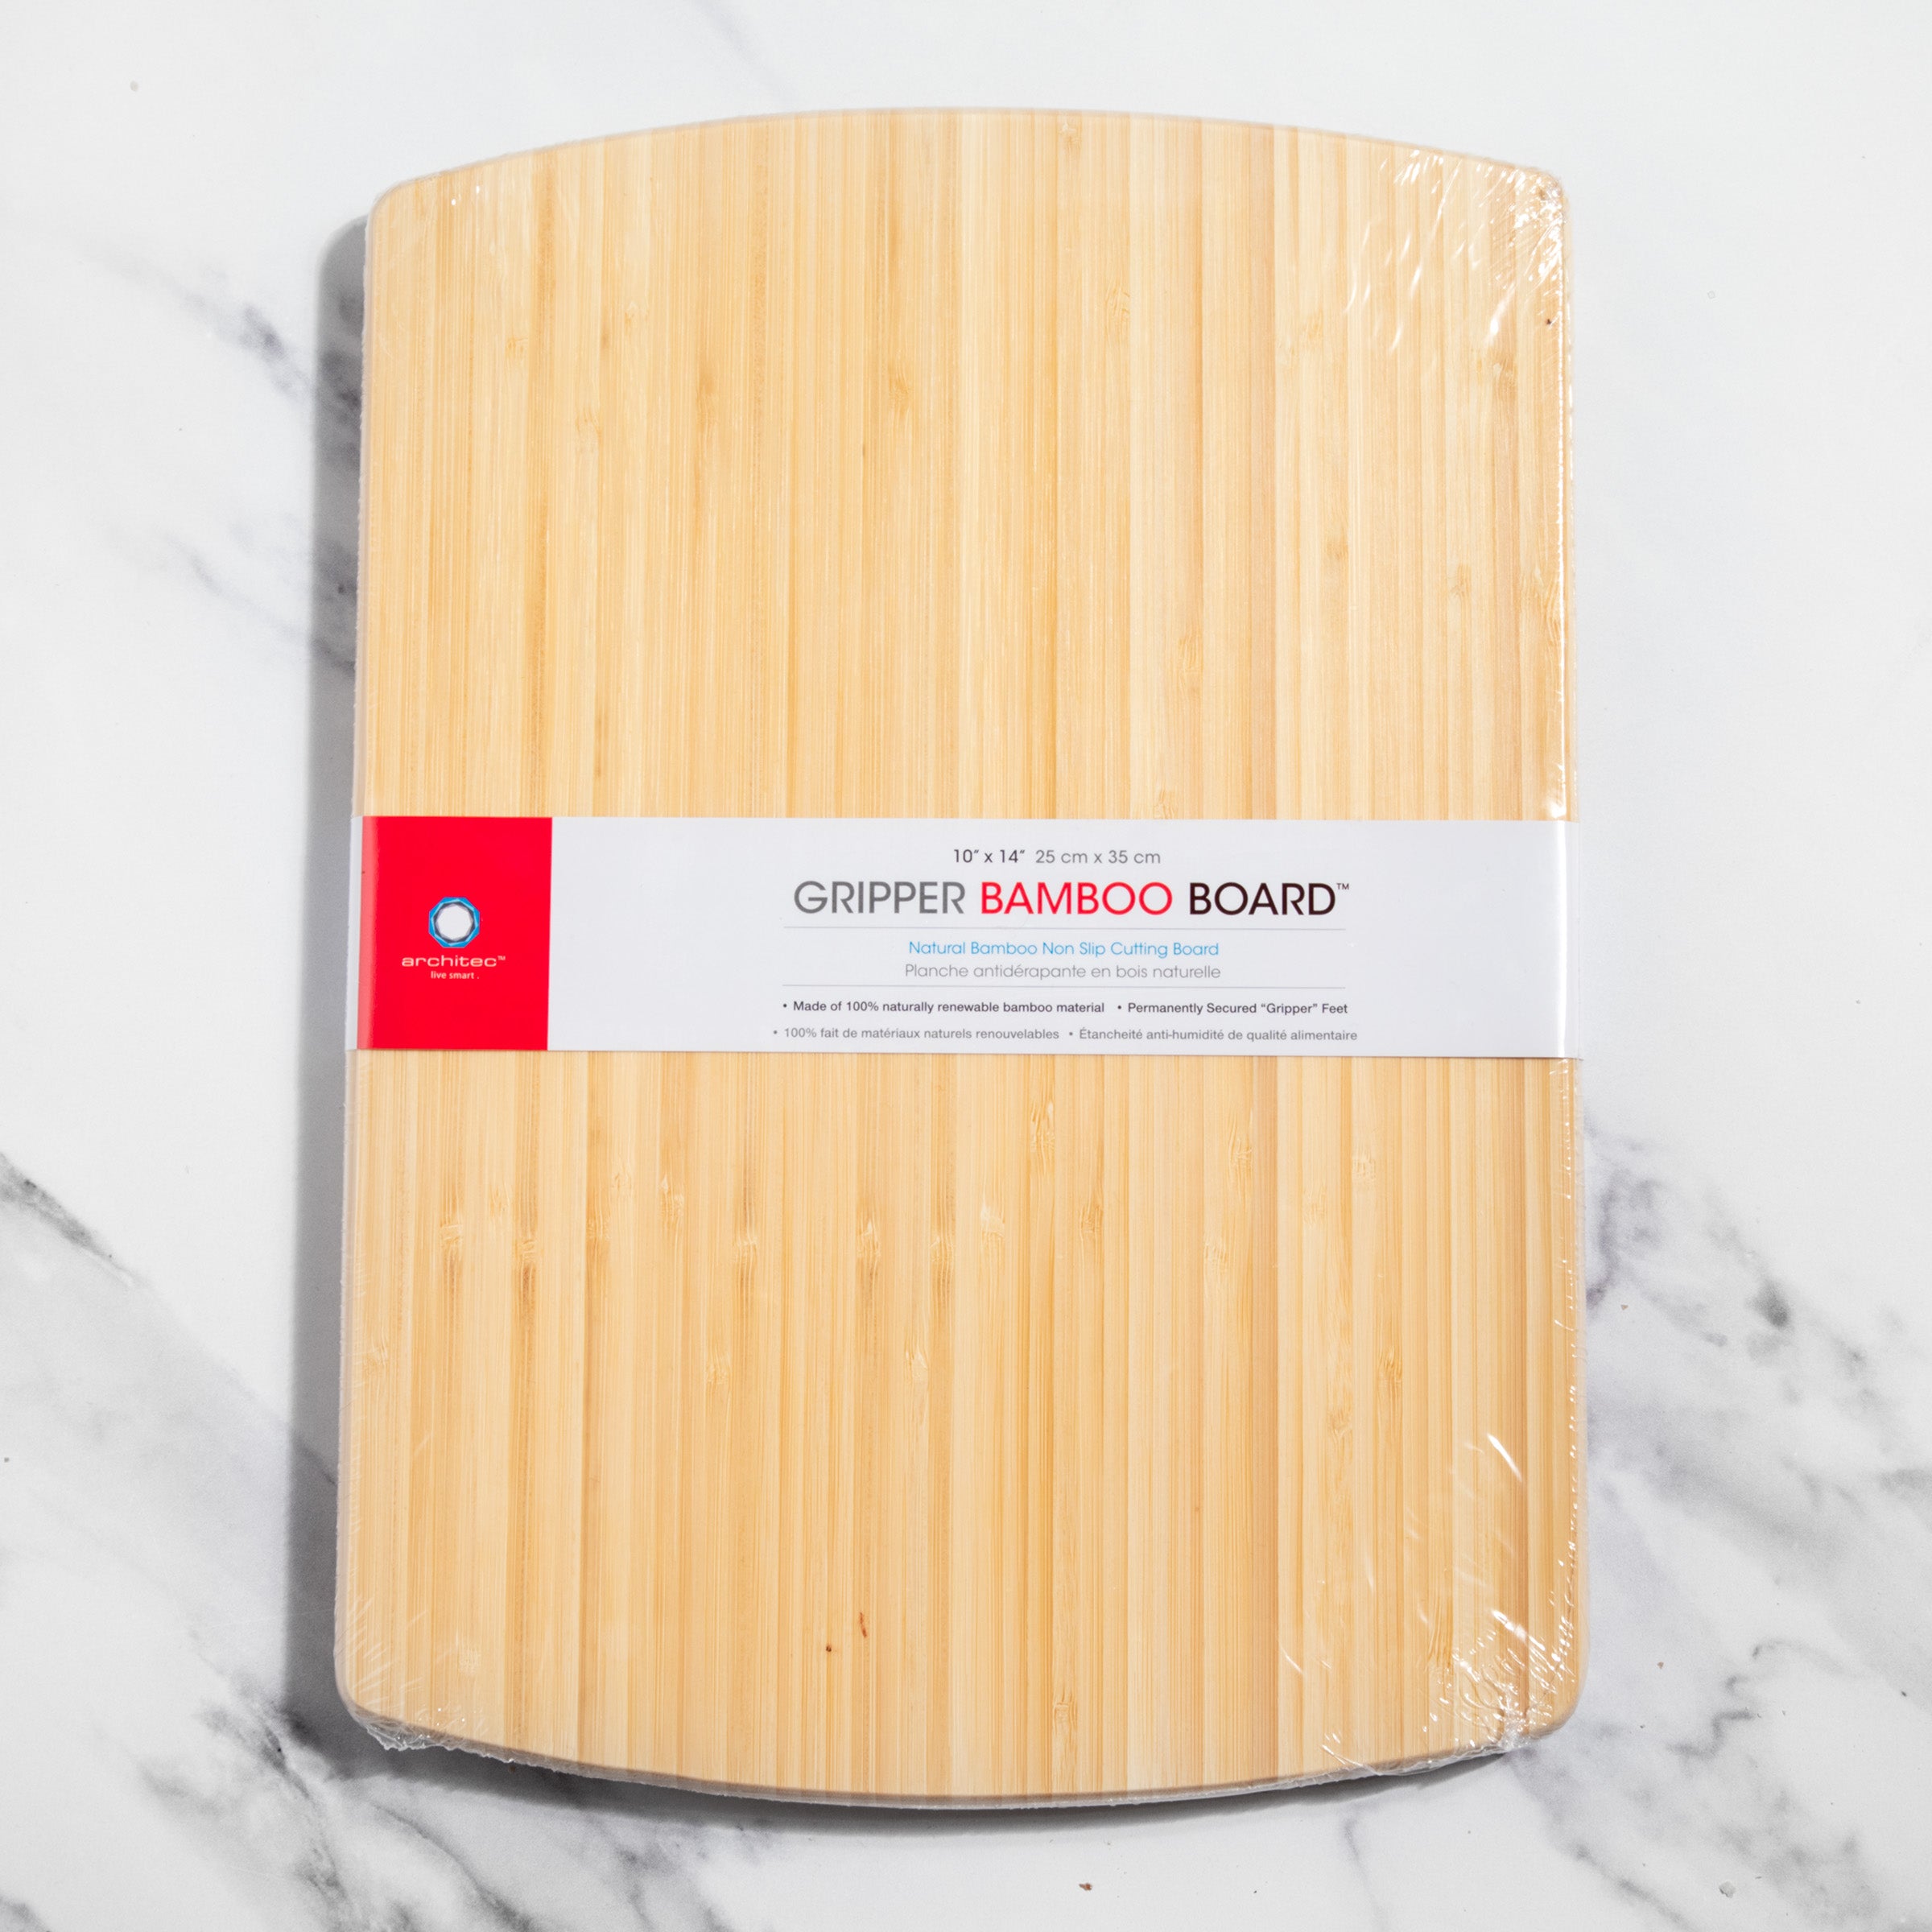 Bamboo Cheese Board